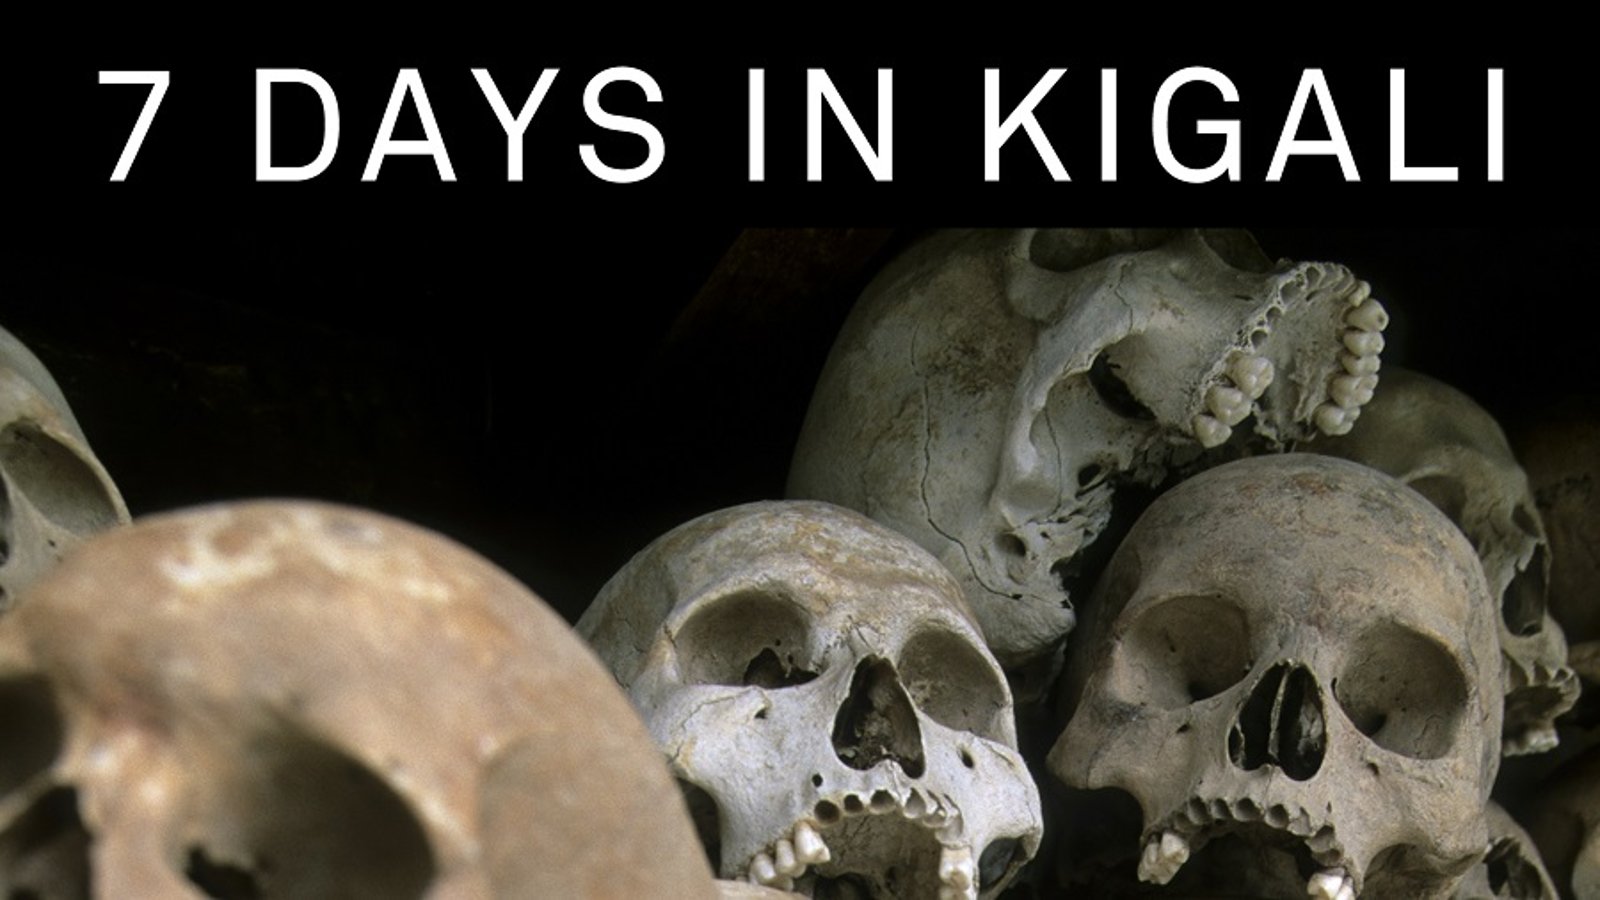 7 Days in Kigali - The 1994 Rwandan Genocide